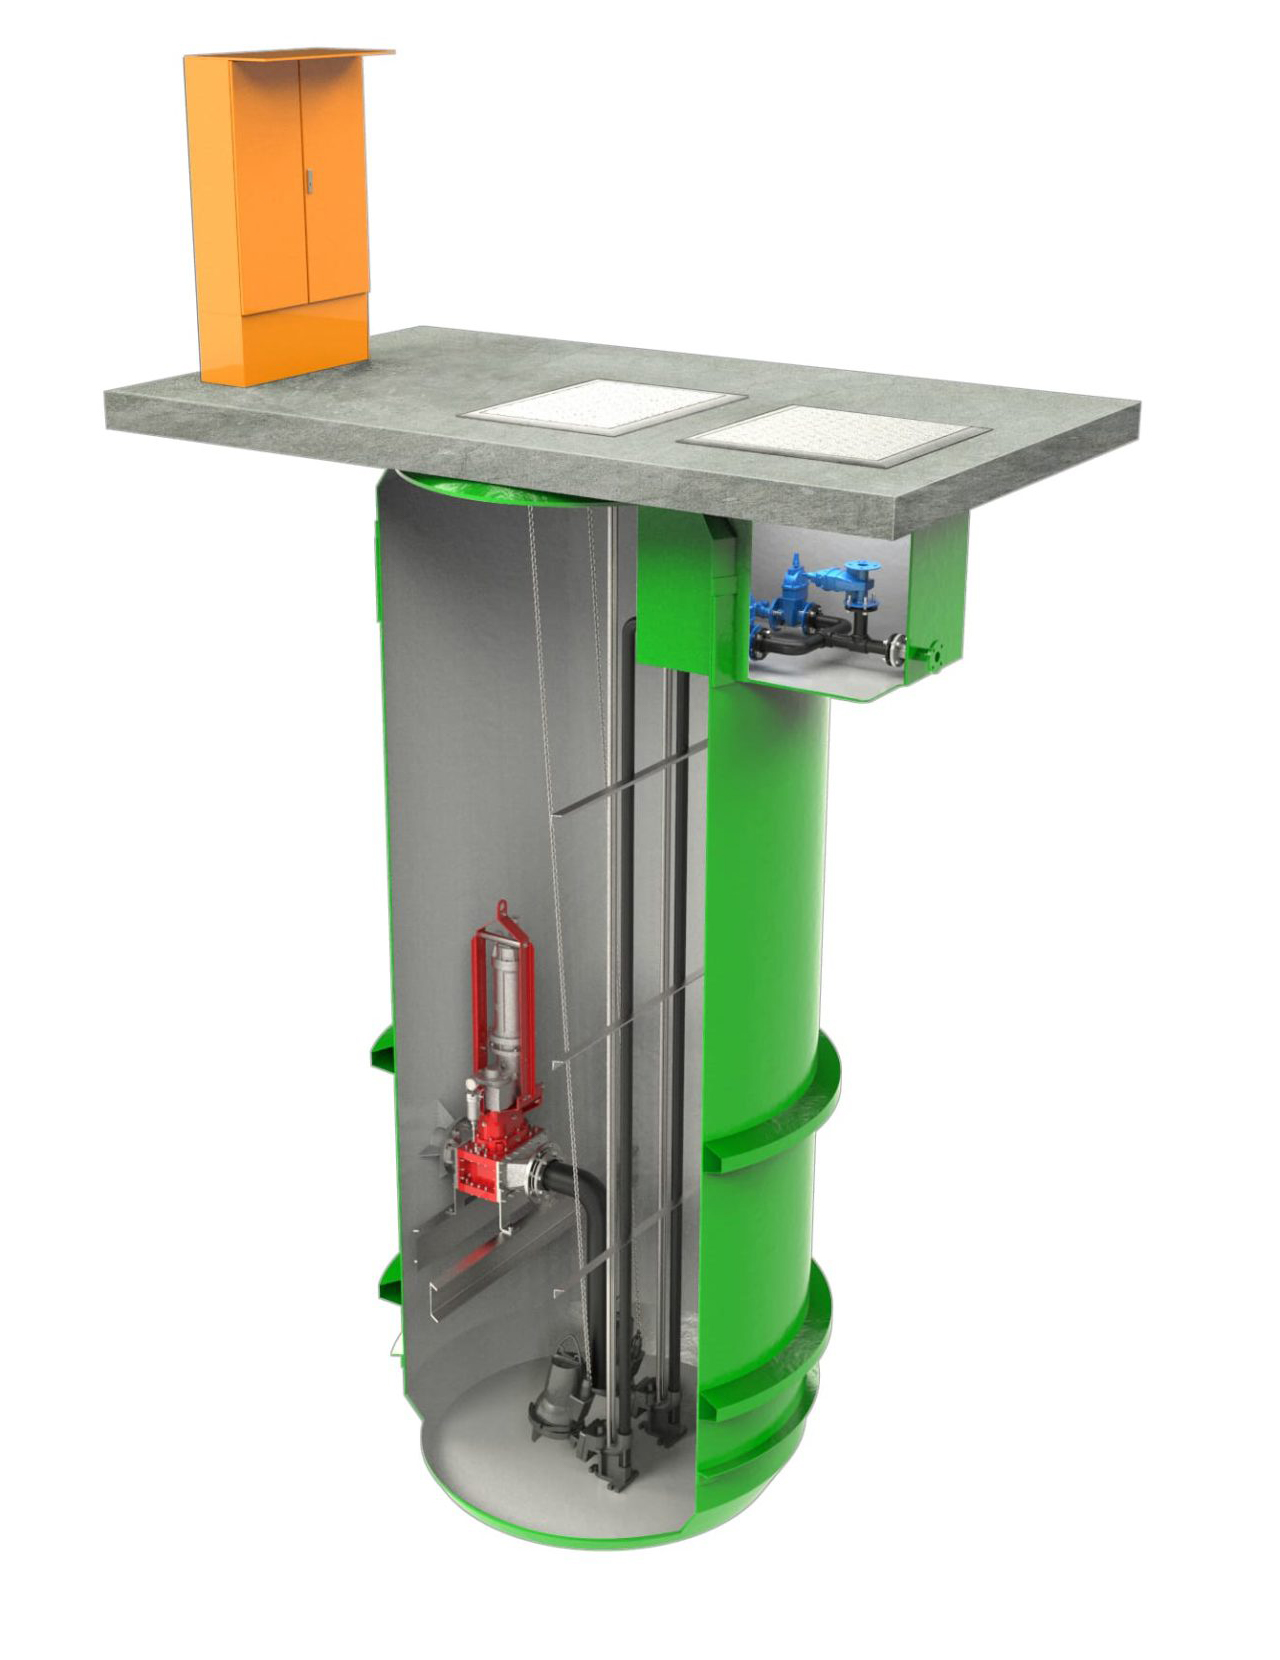 Sleek vertical render of a sewer pump station model